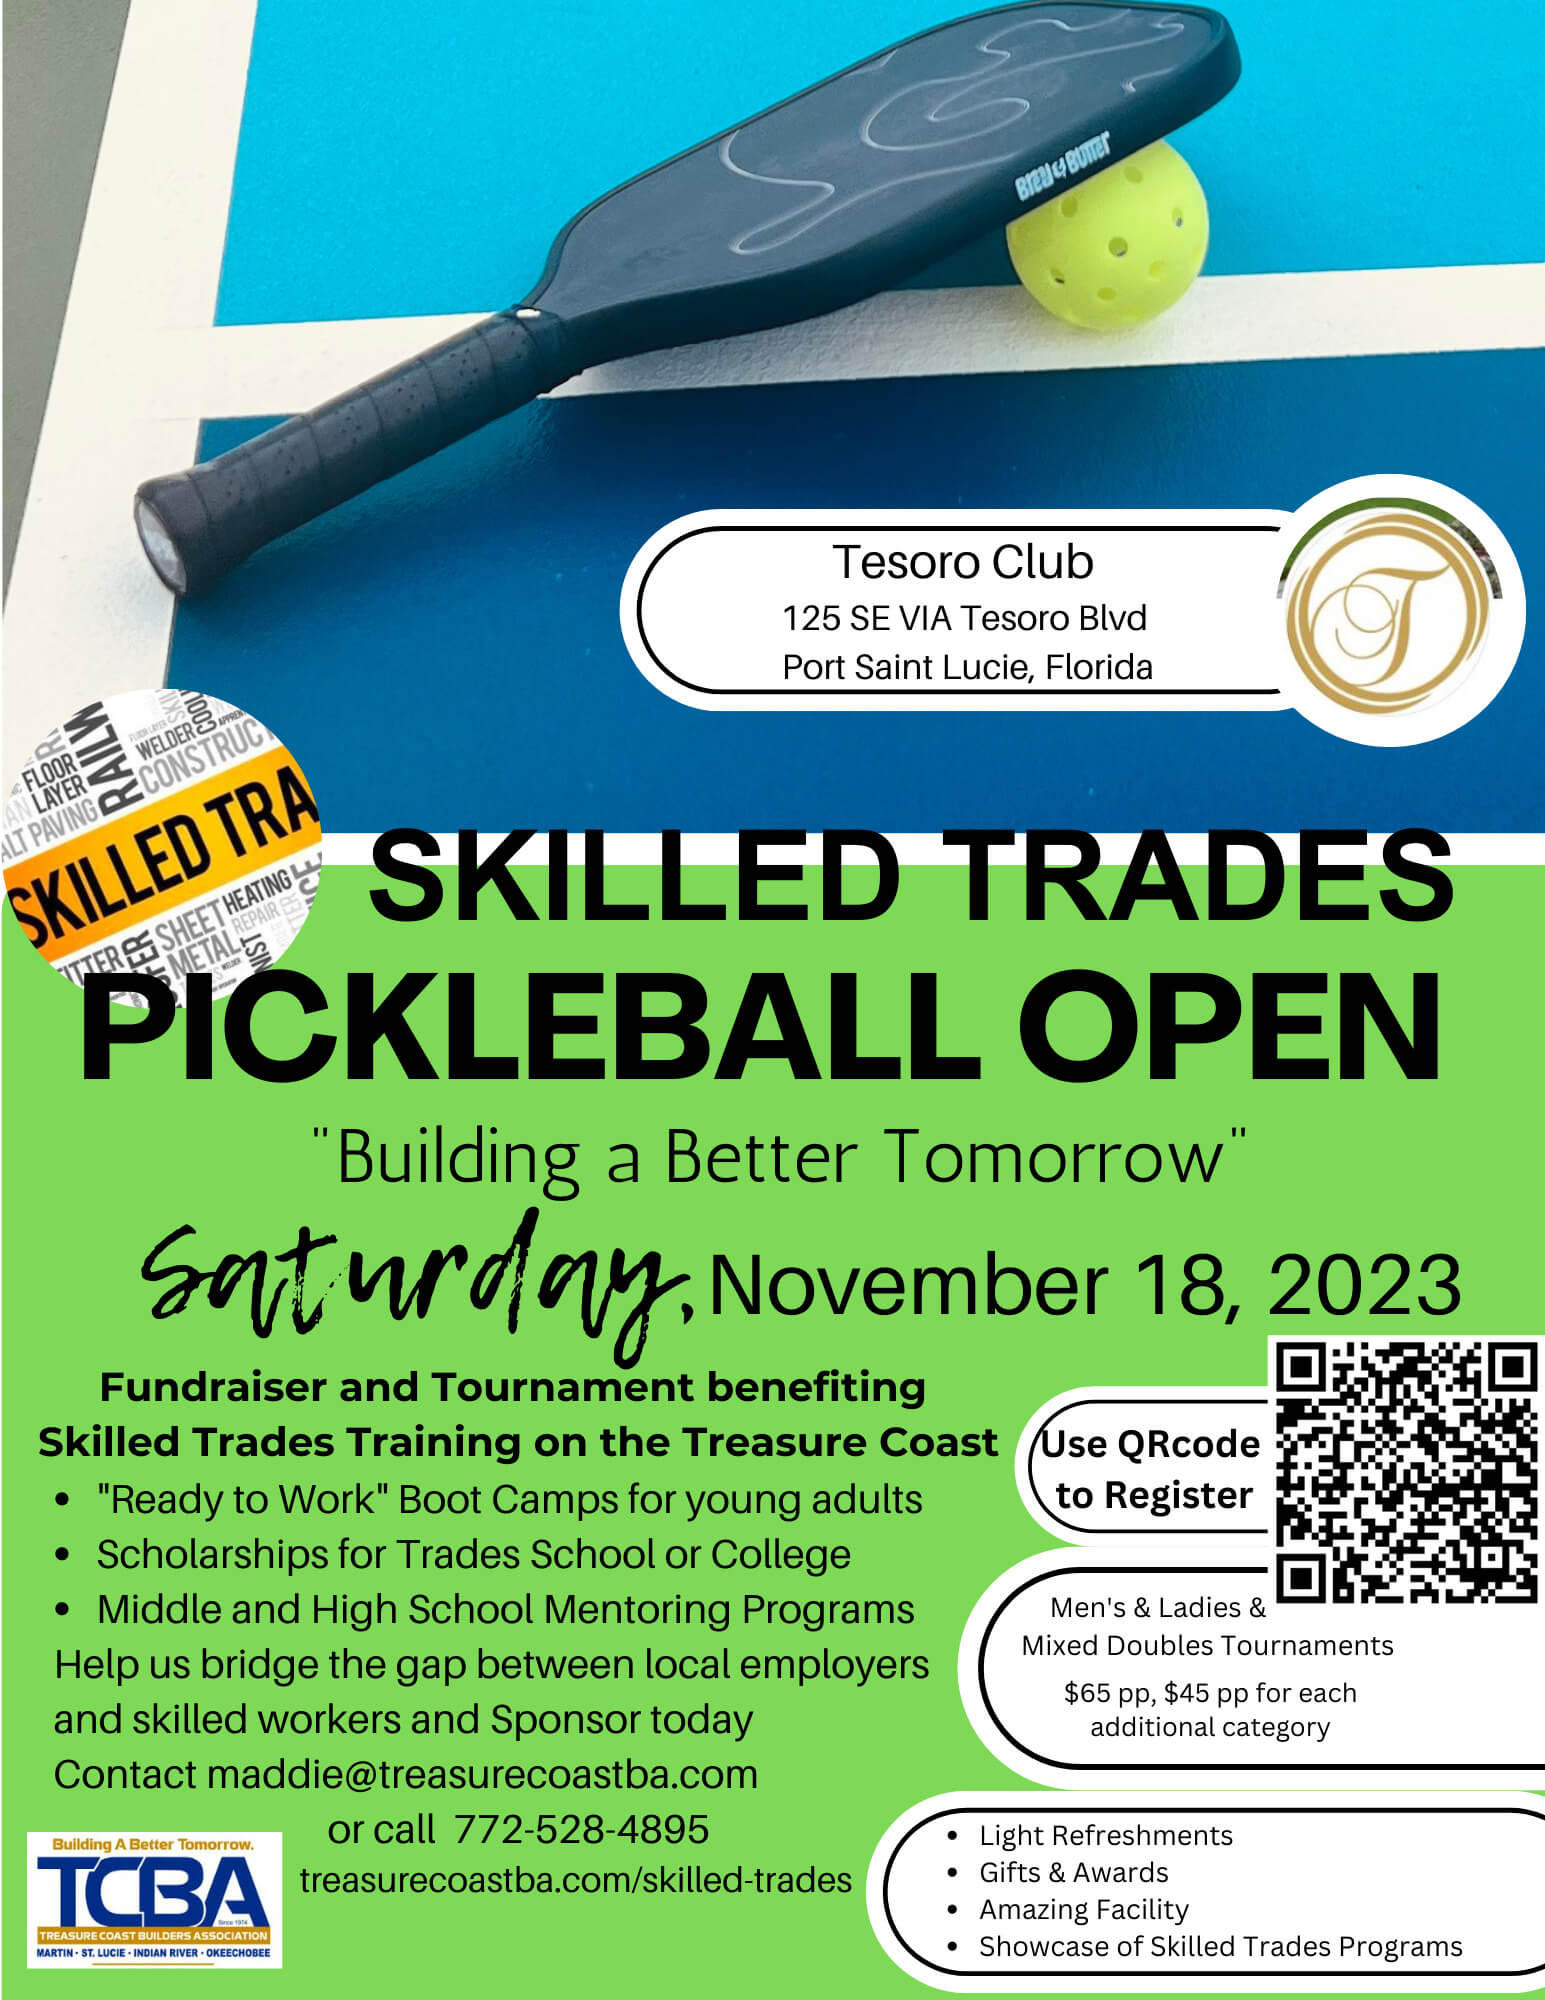 pickleball tournament flyer